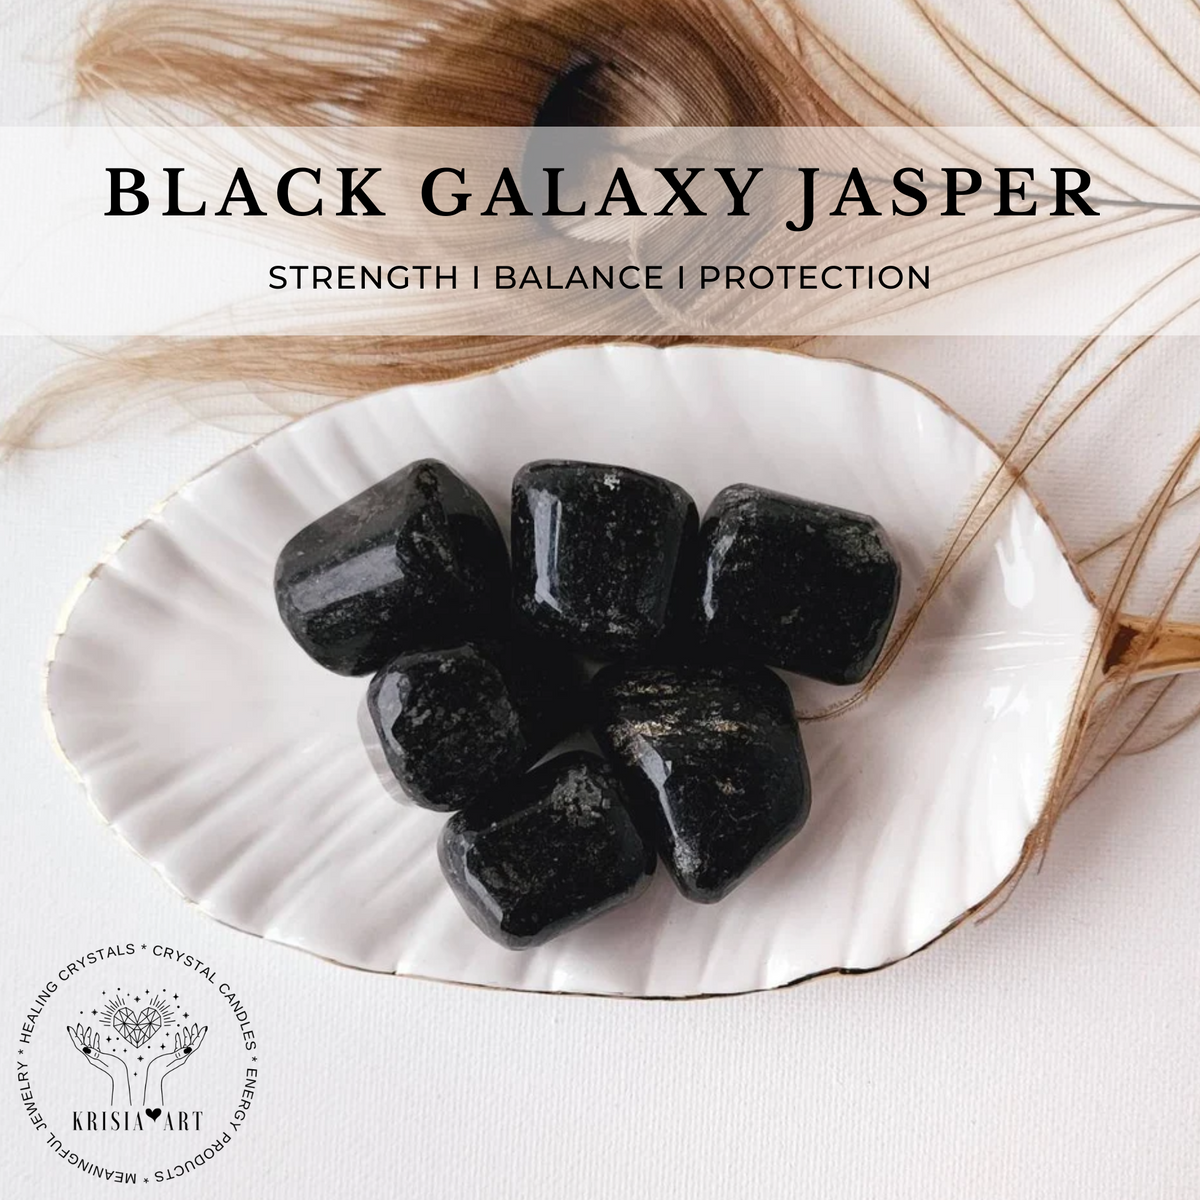 BLACK GALAXY JASPER tumbled crystal for strength, protection, balance, reiki healing root chakra meditation